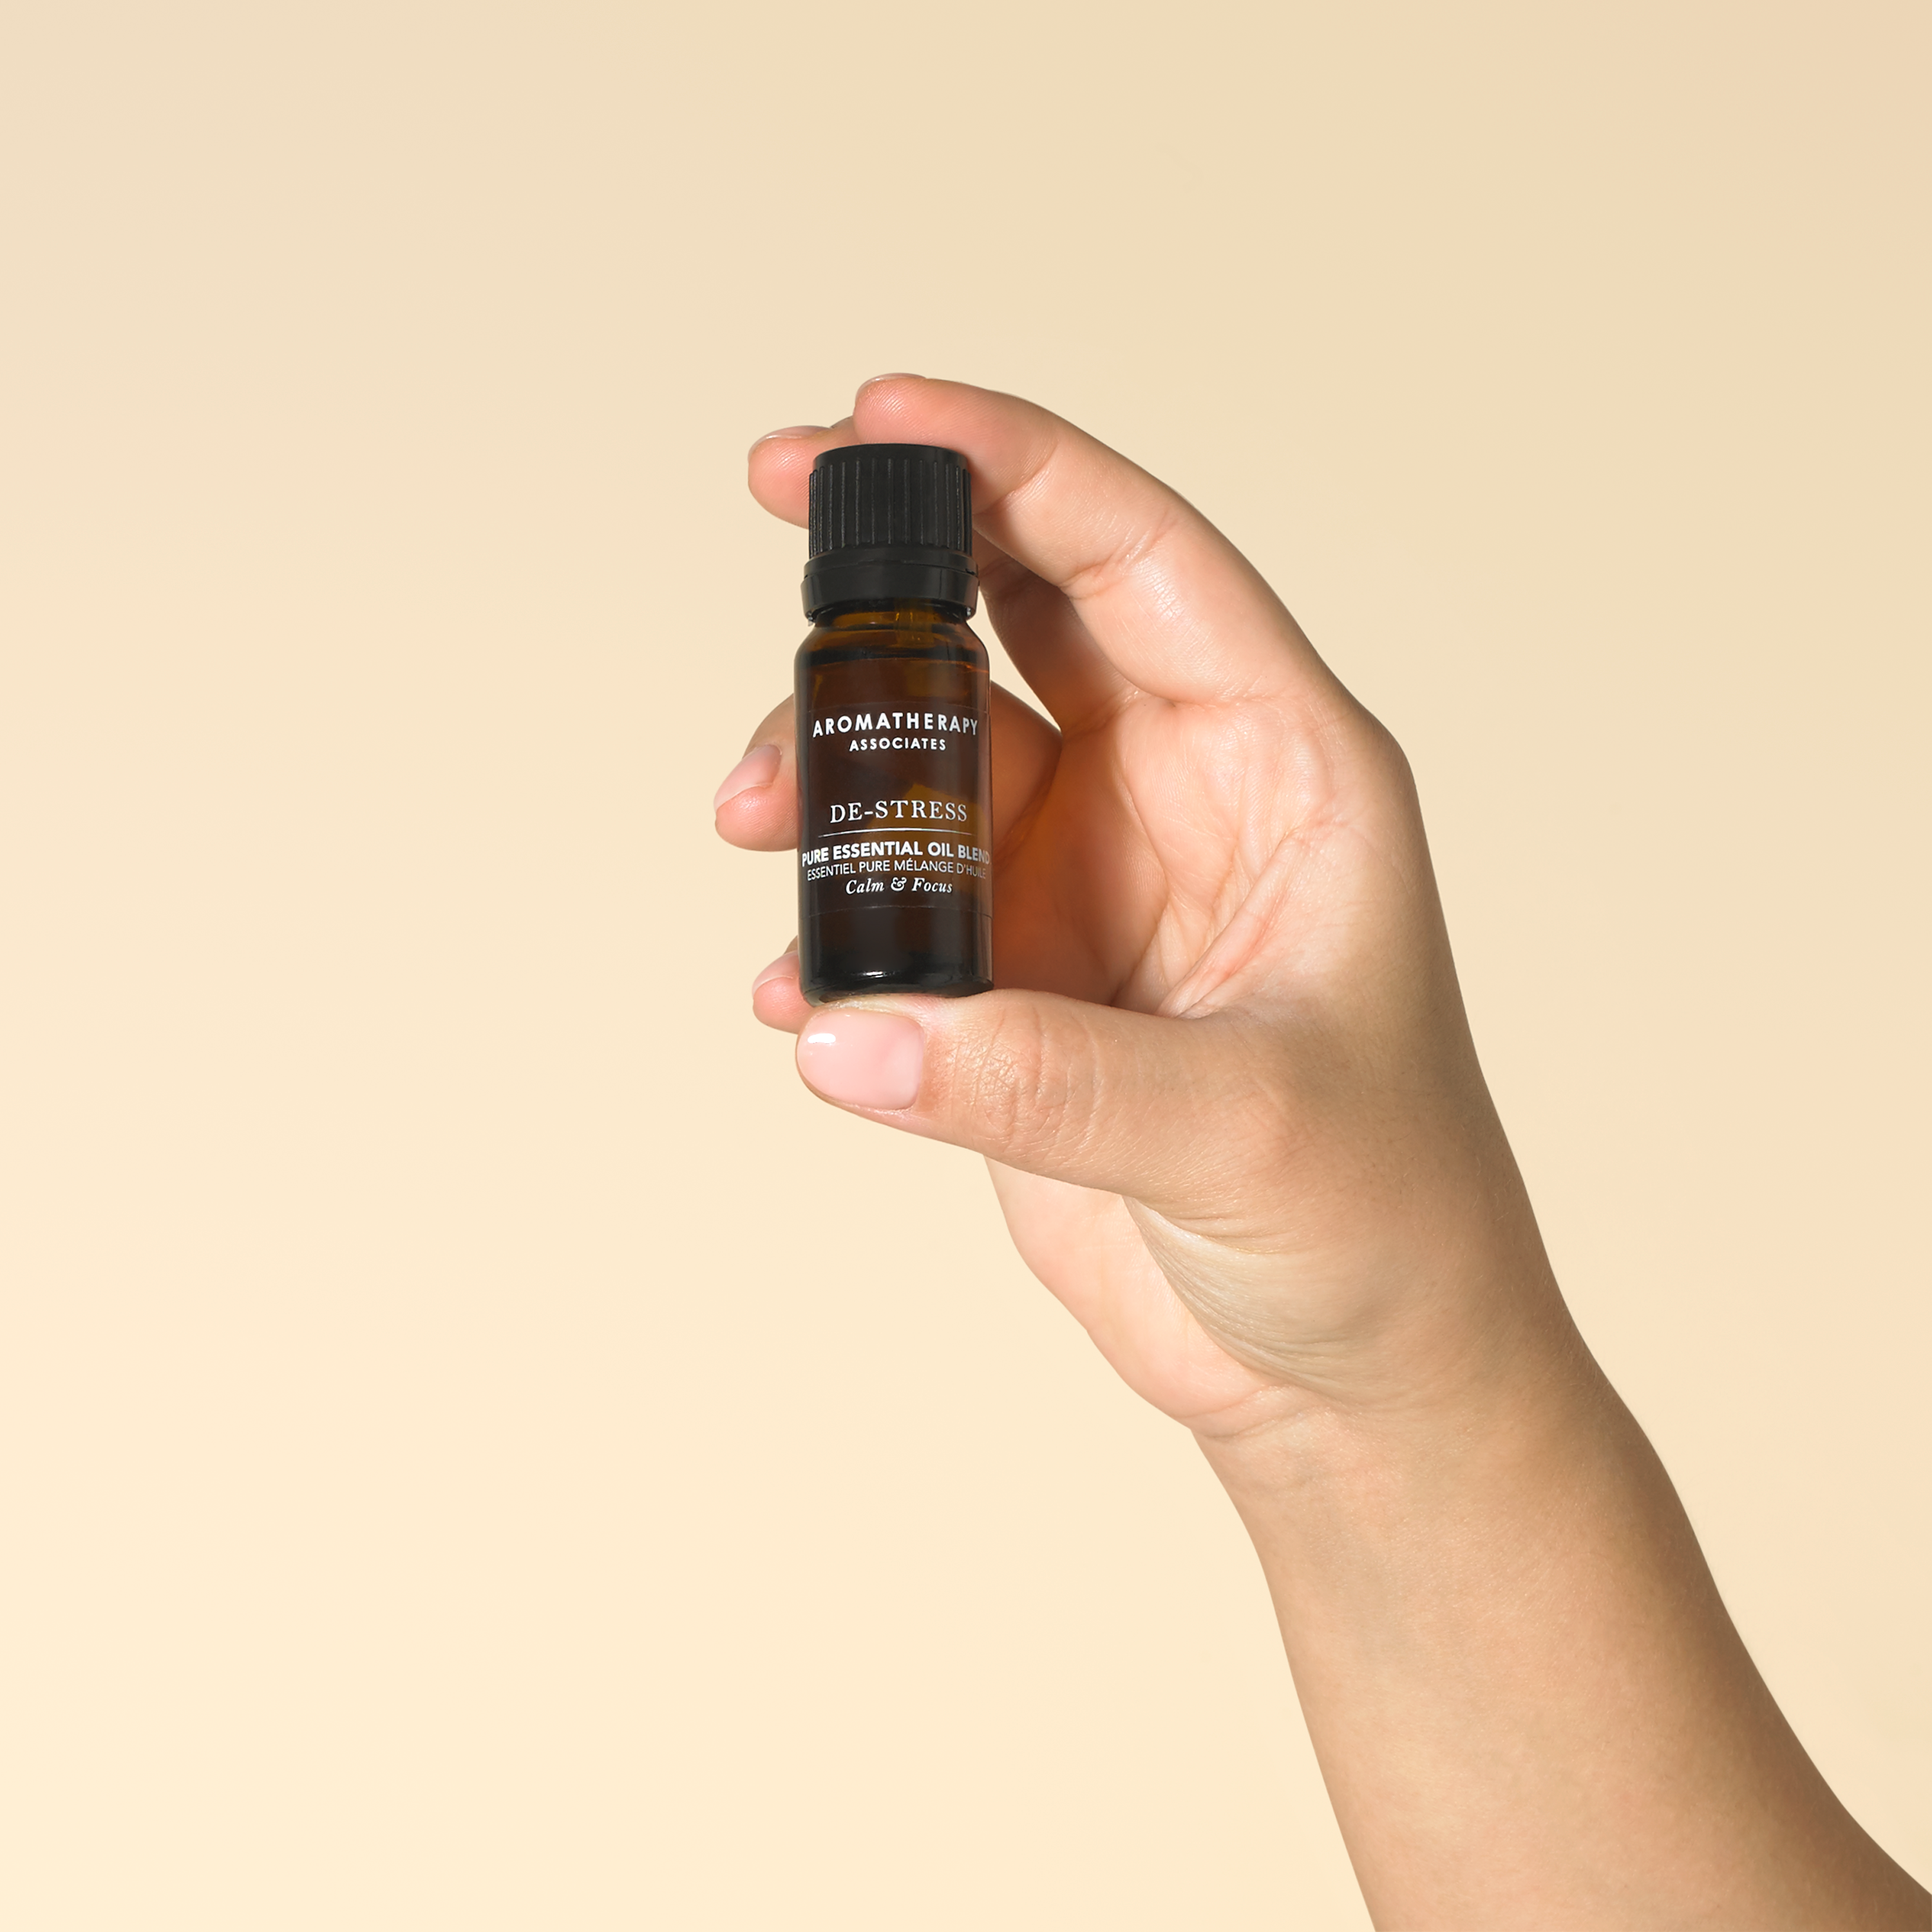 De-Stress Pure Essential Oil Blend Aromatherapy Associates